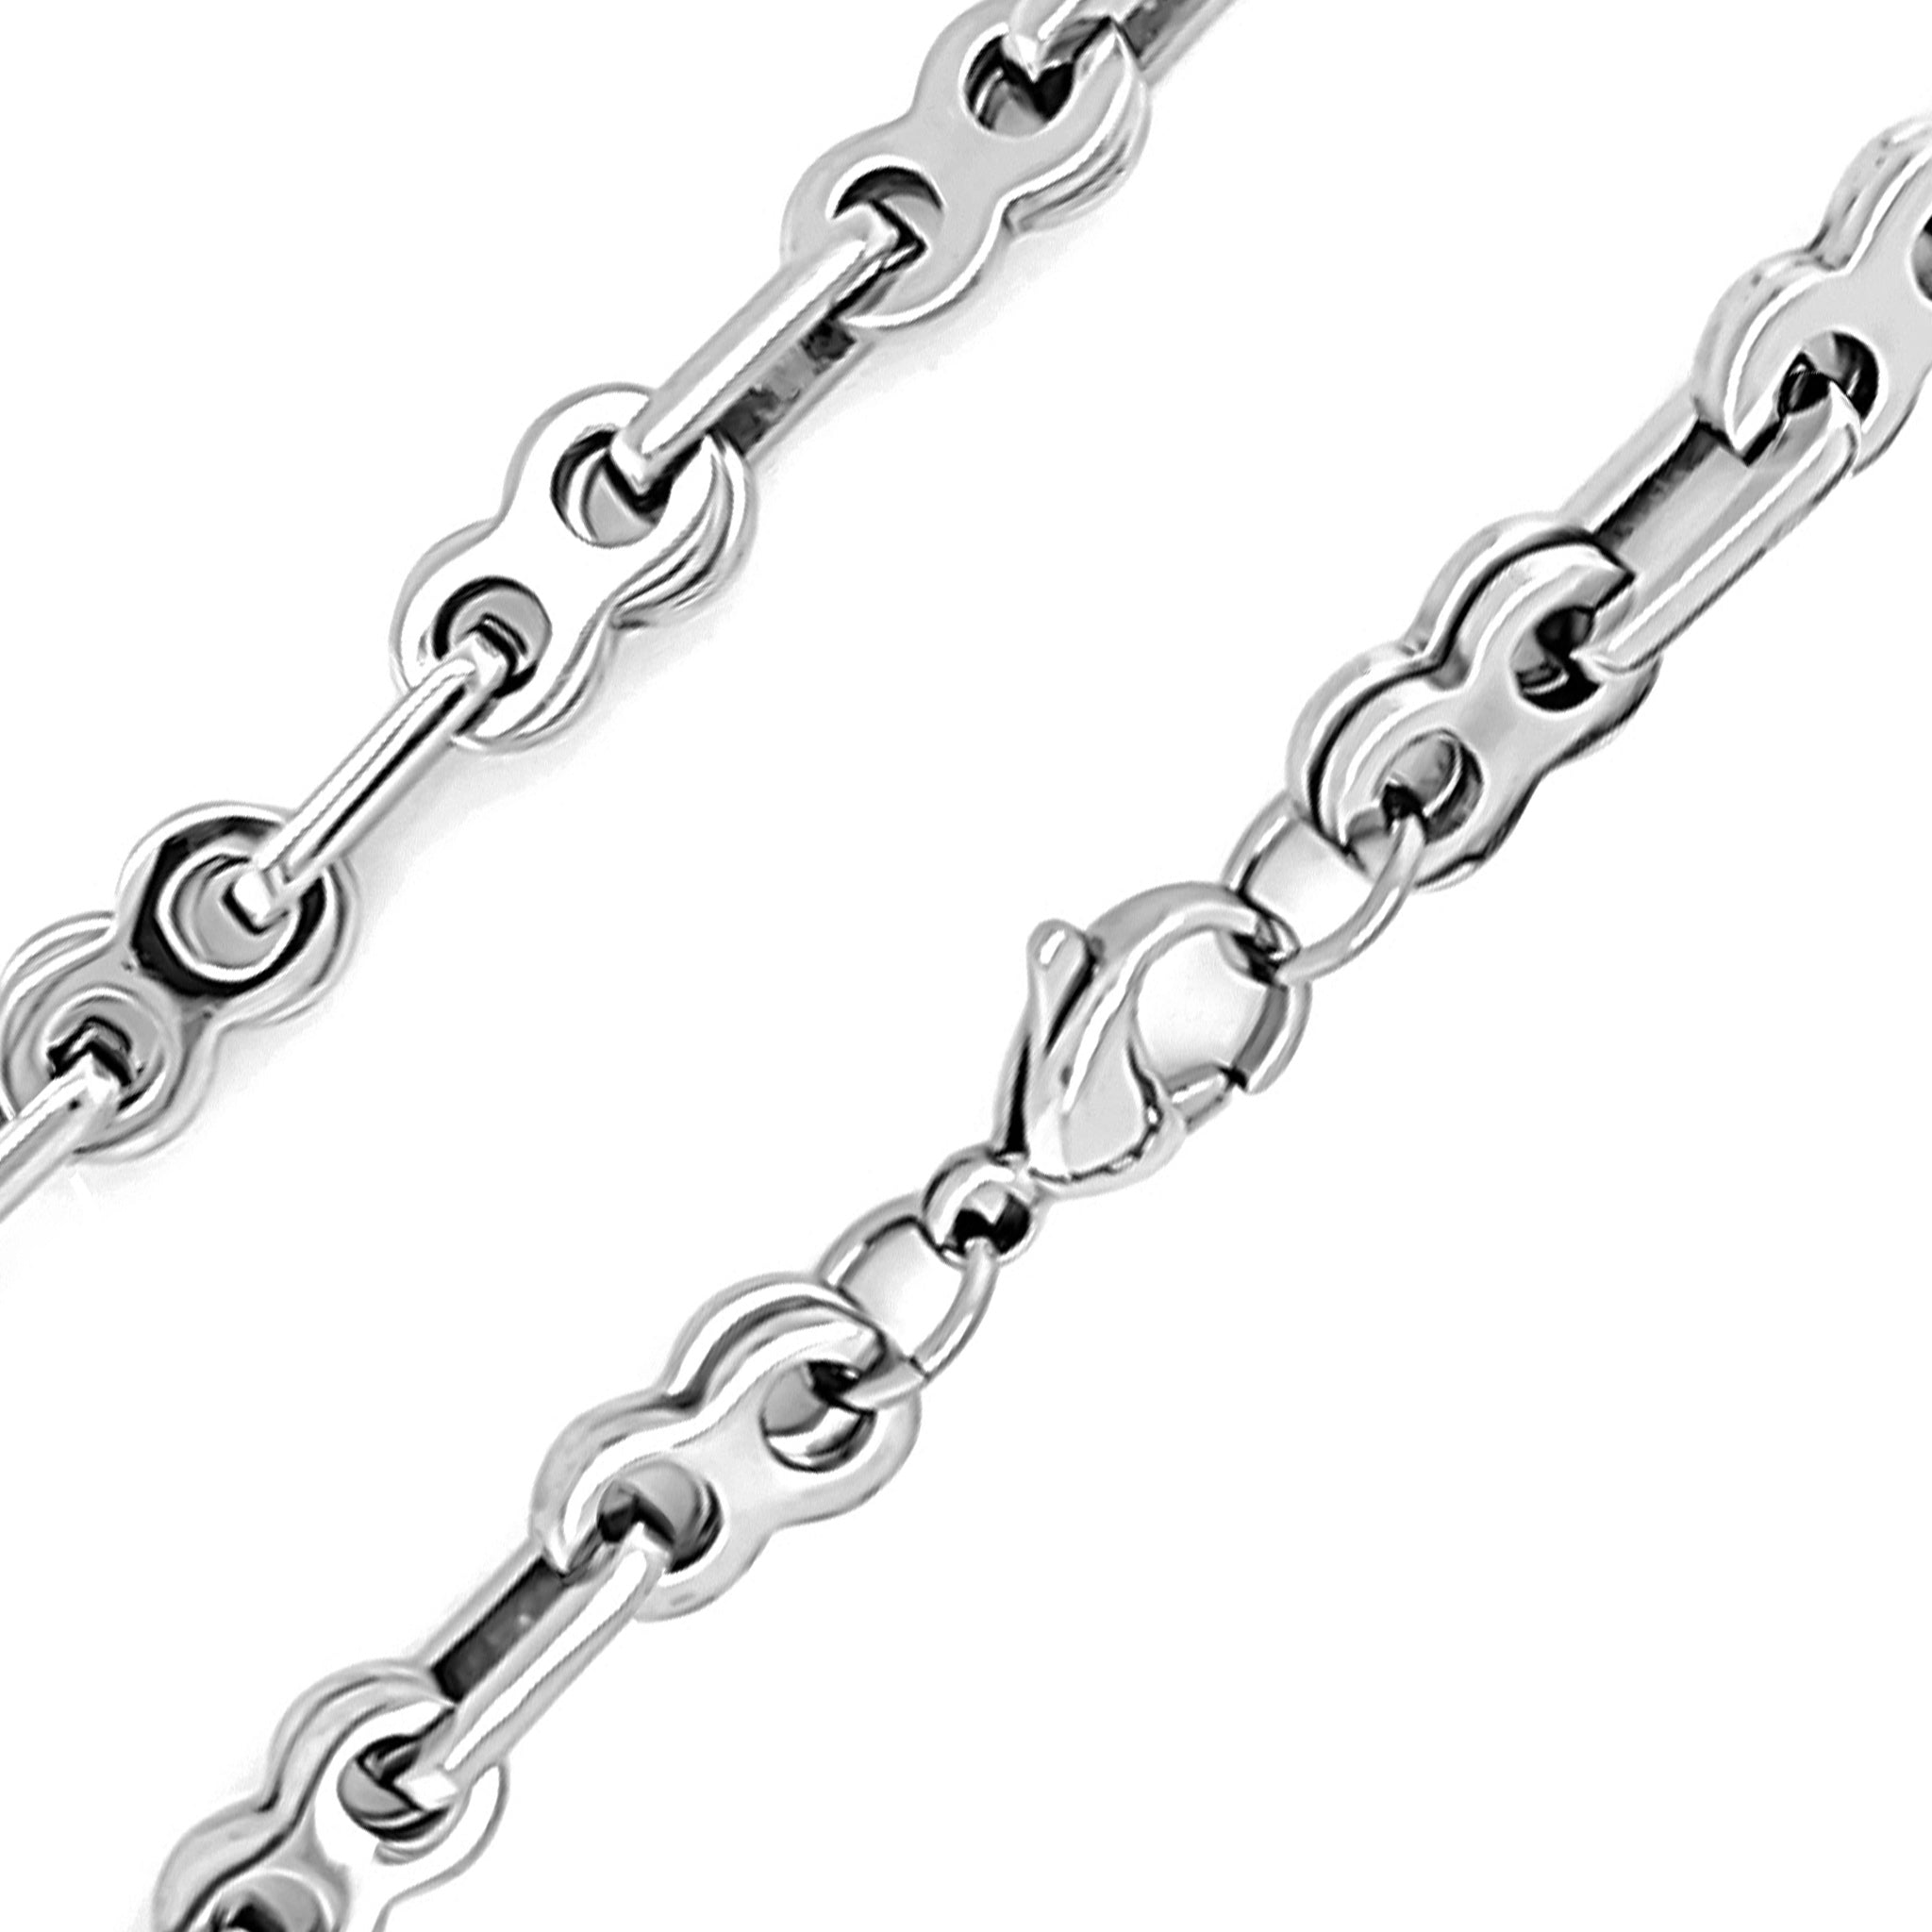  Nanafast Chain Lock Necklace Stainless Steel Statement